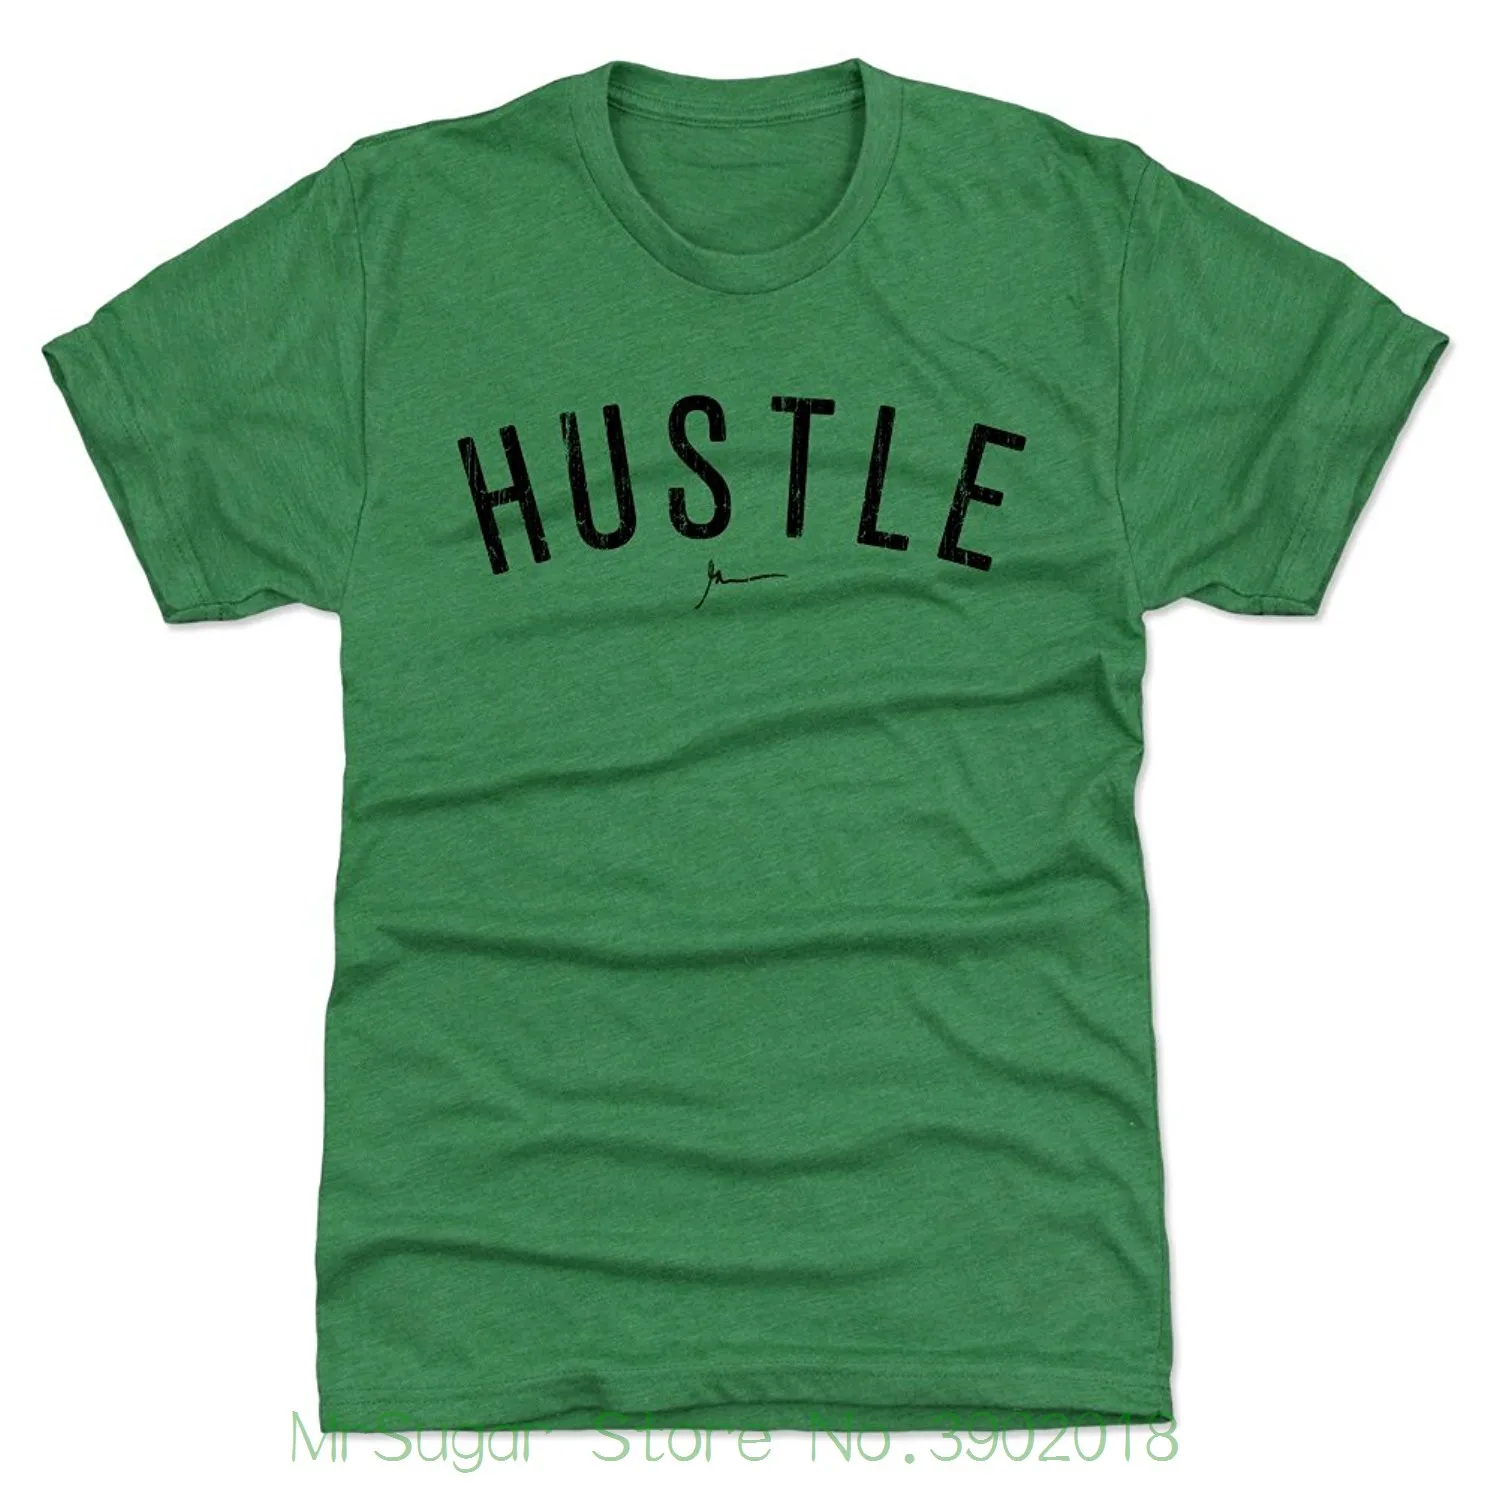 Gary Vaynerchuk T shirt Comfortable Garyvee Fan Gear Garyvee Hustle Sig ...